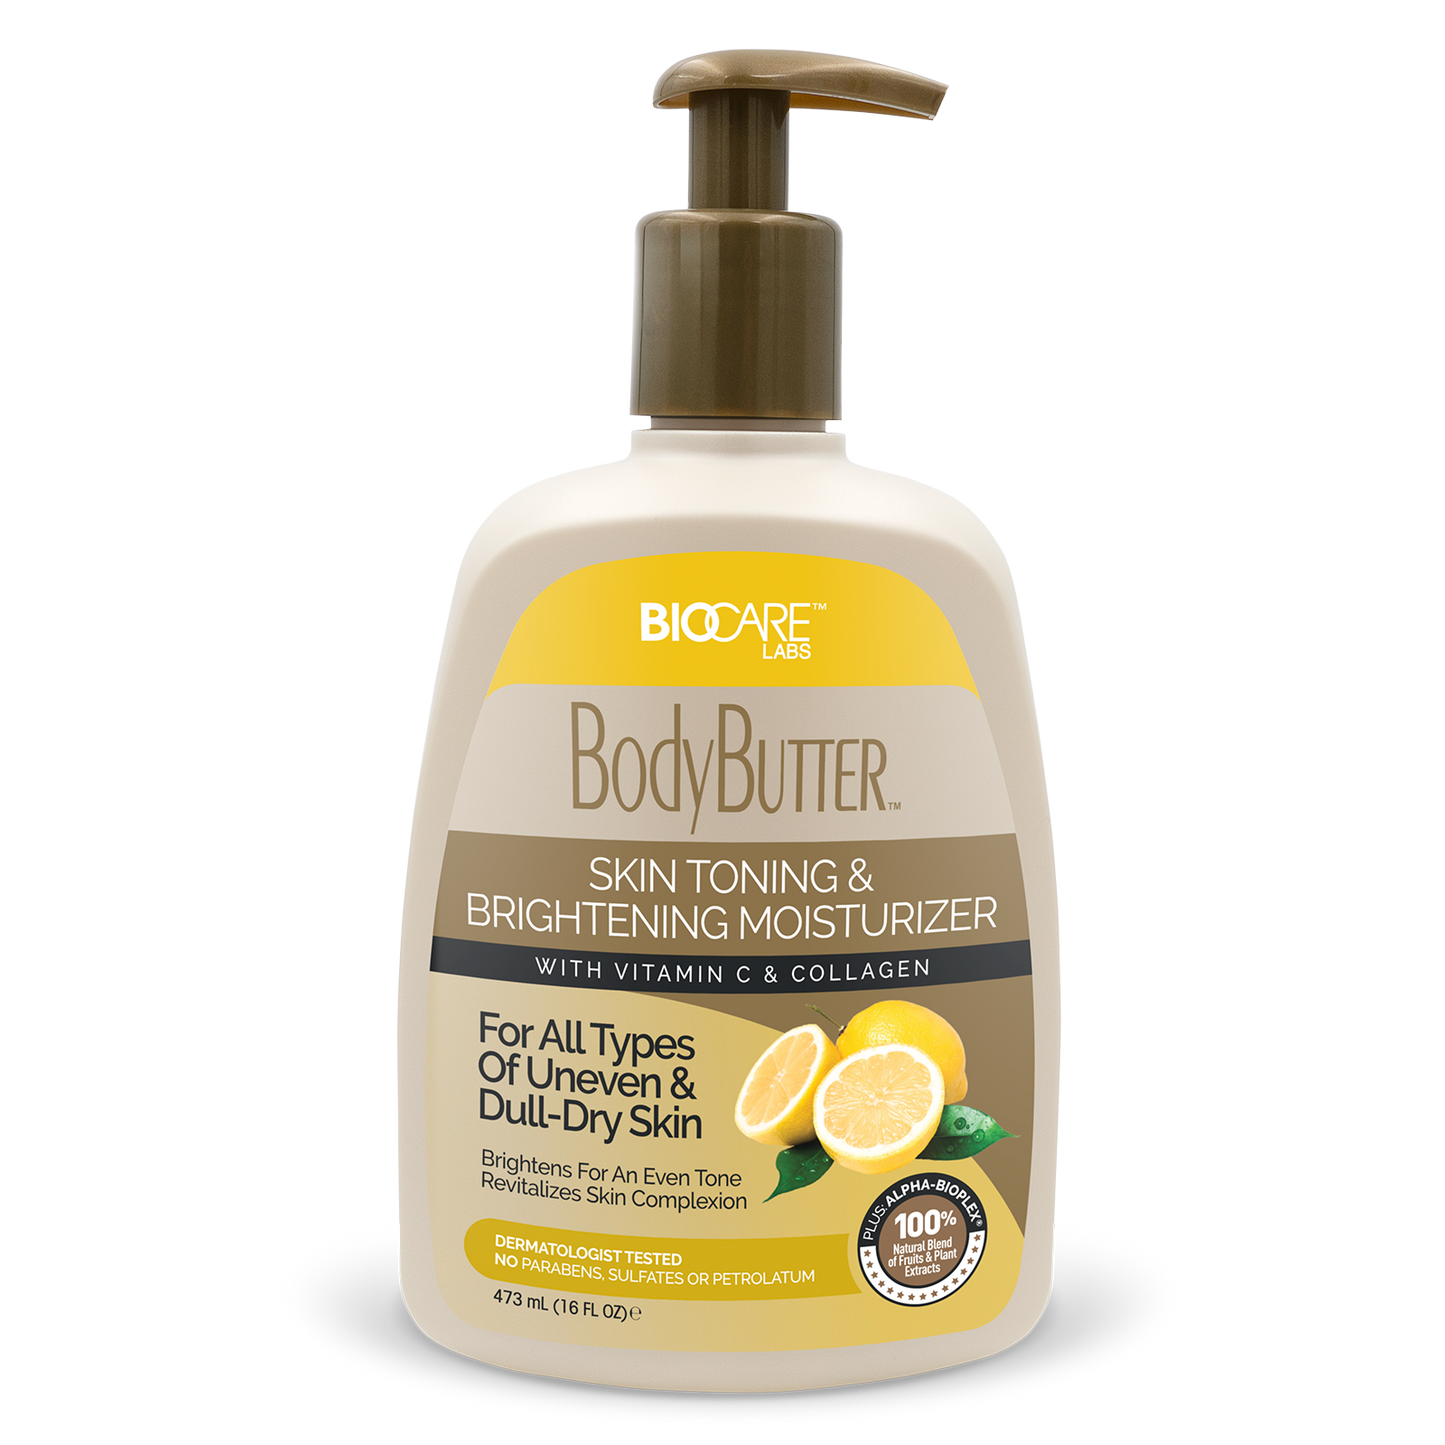  16 oz bottle of BodyButter™ With Vitamin C & Collagen